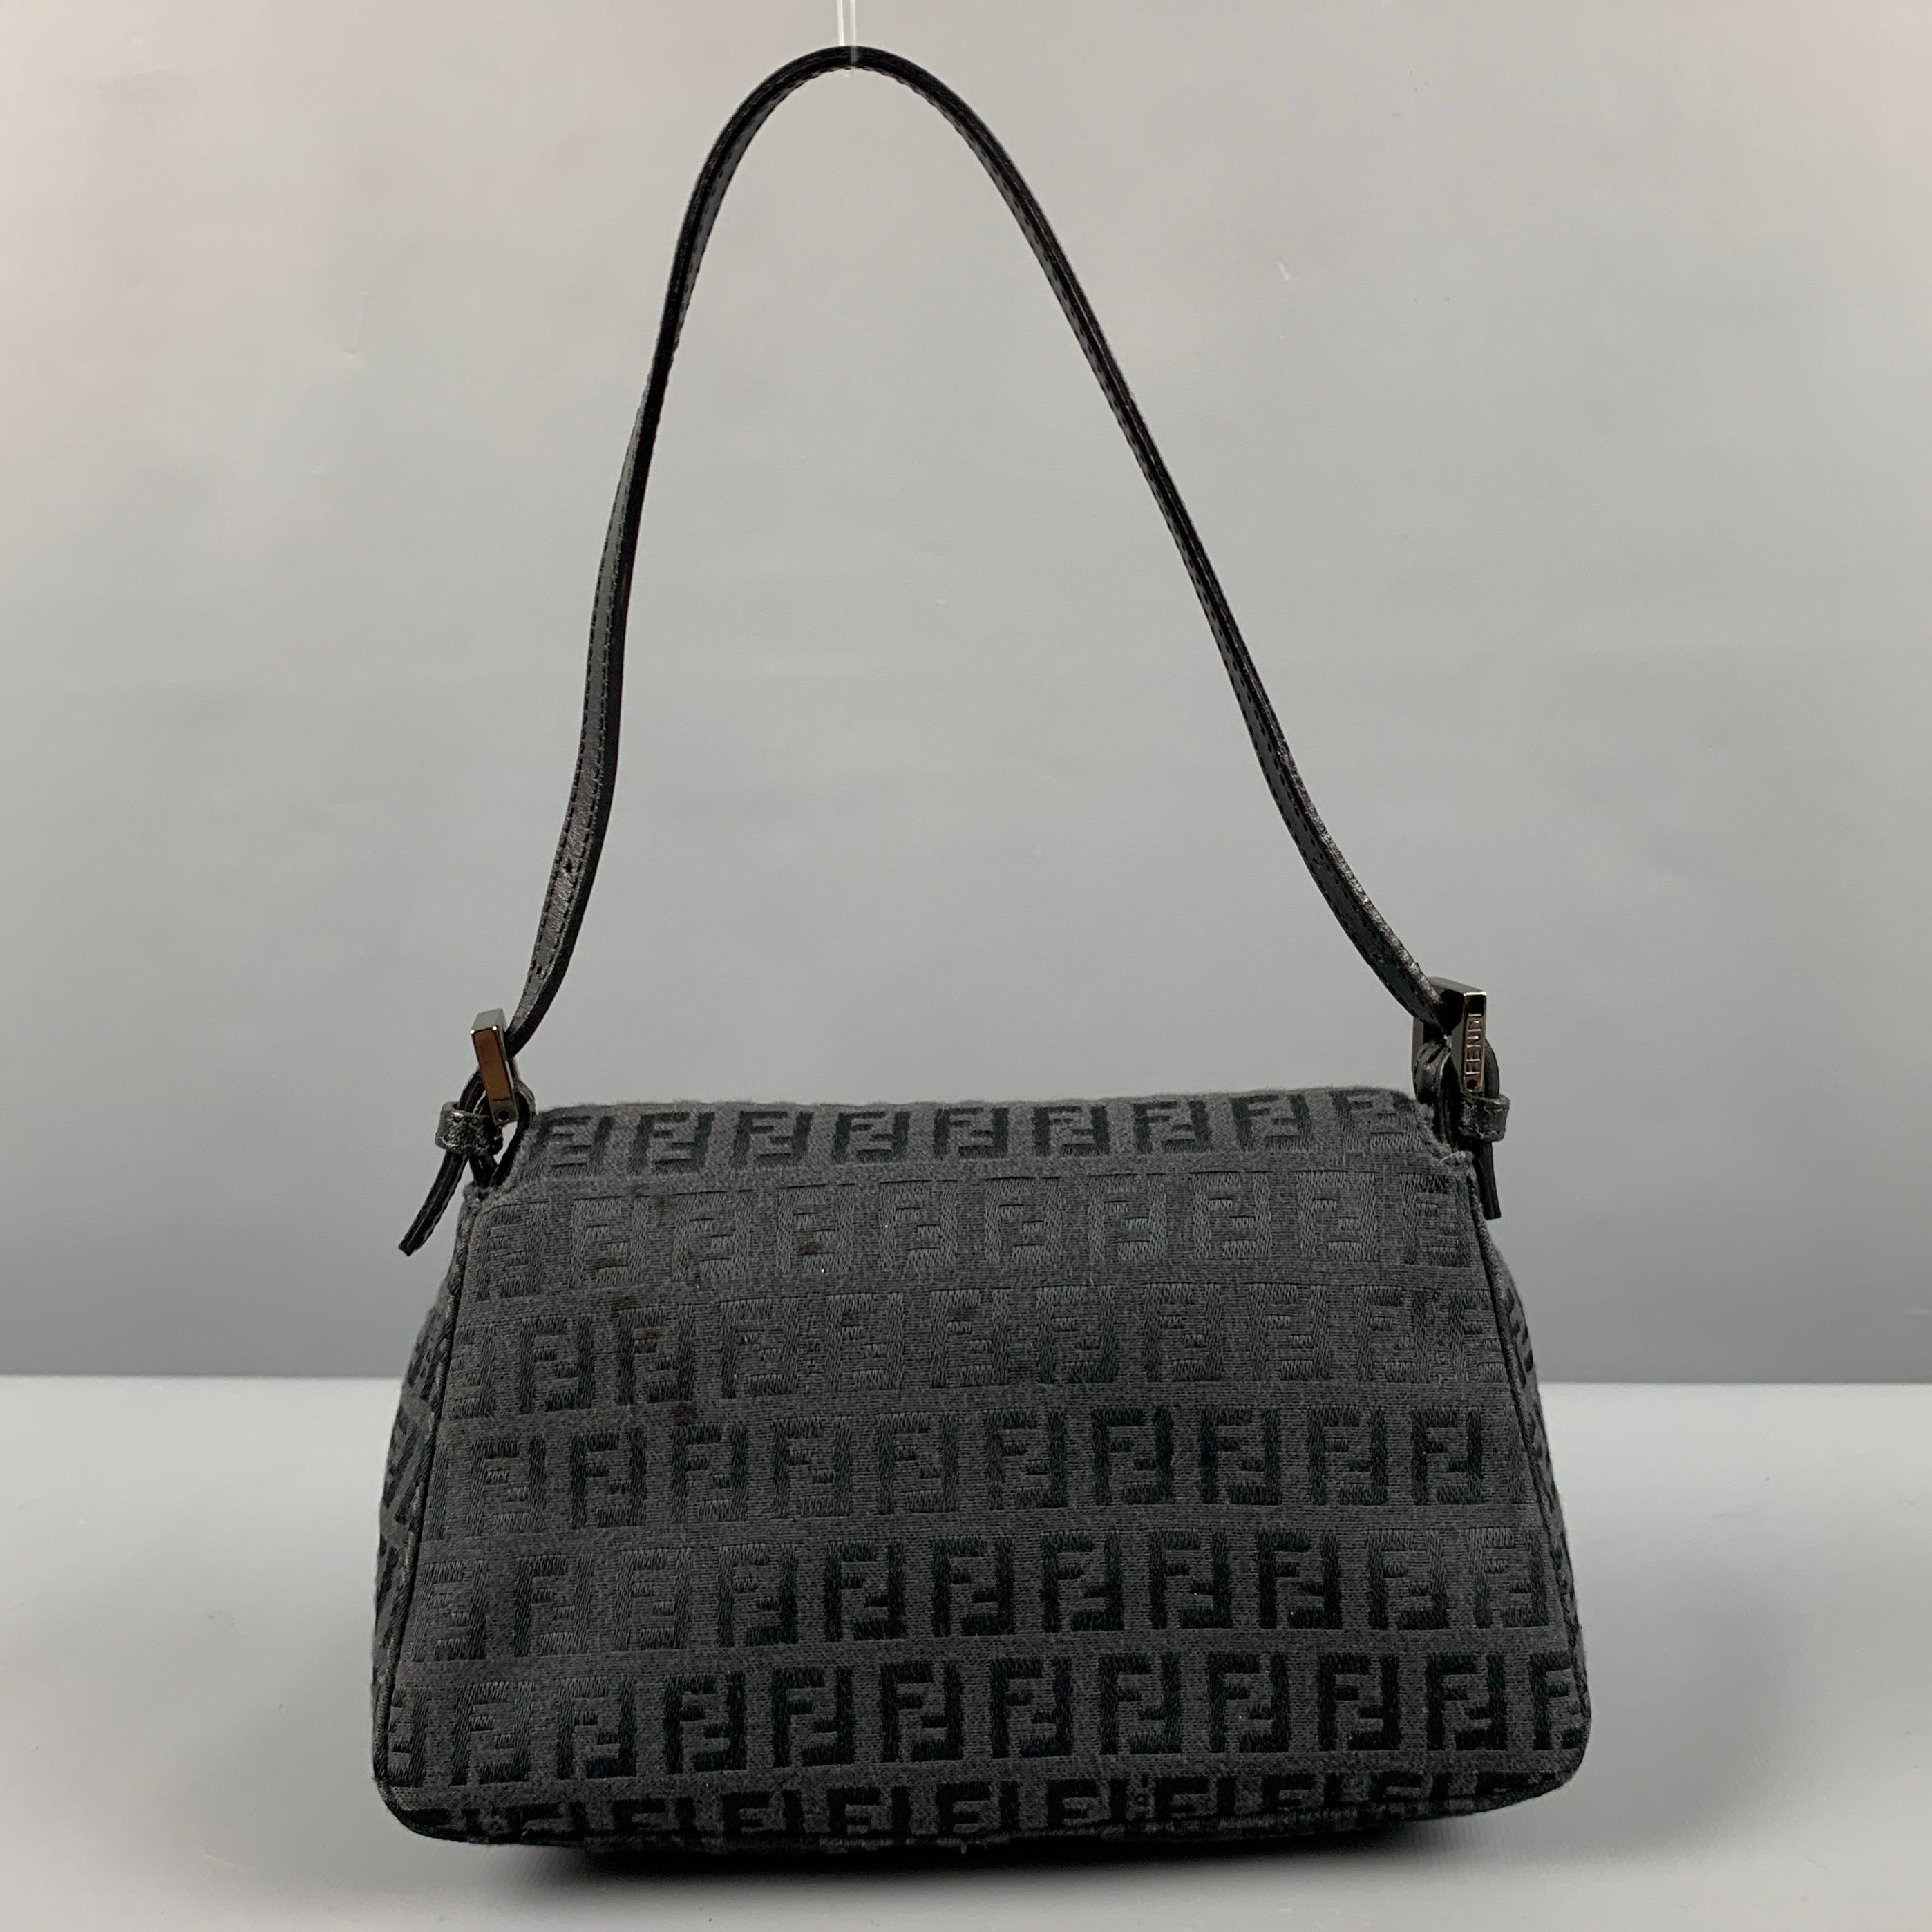 FENDI Black Monogram Handbag In Good Condition For Sale In San Francisco, CA